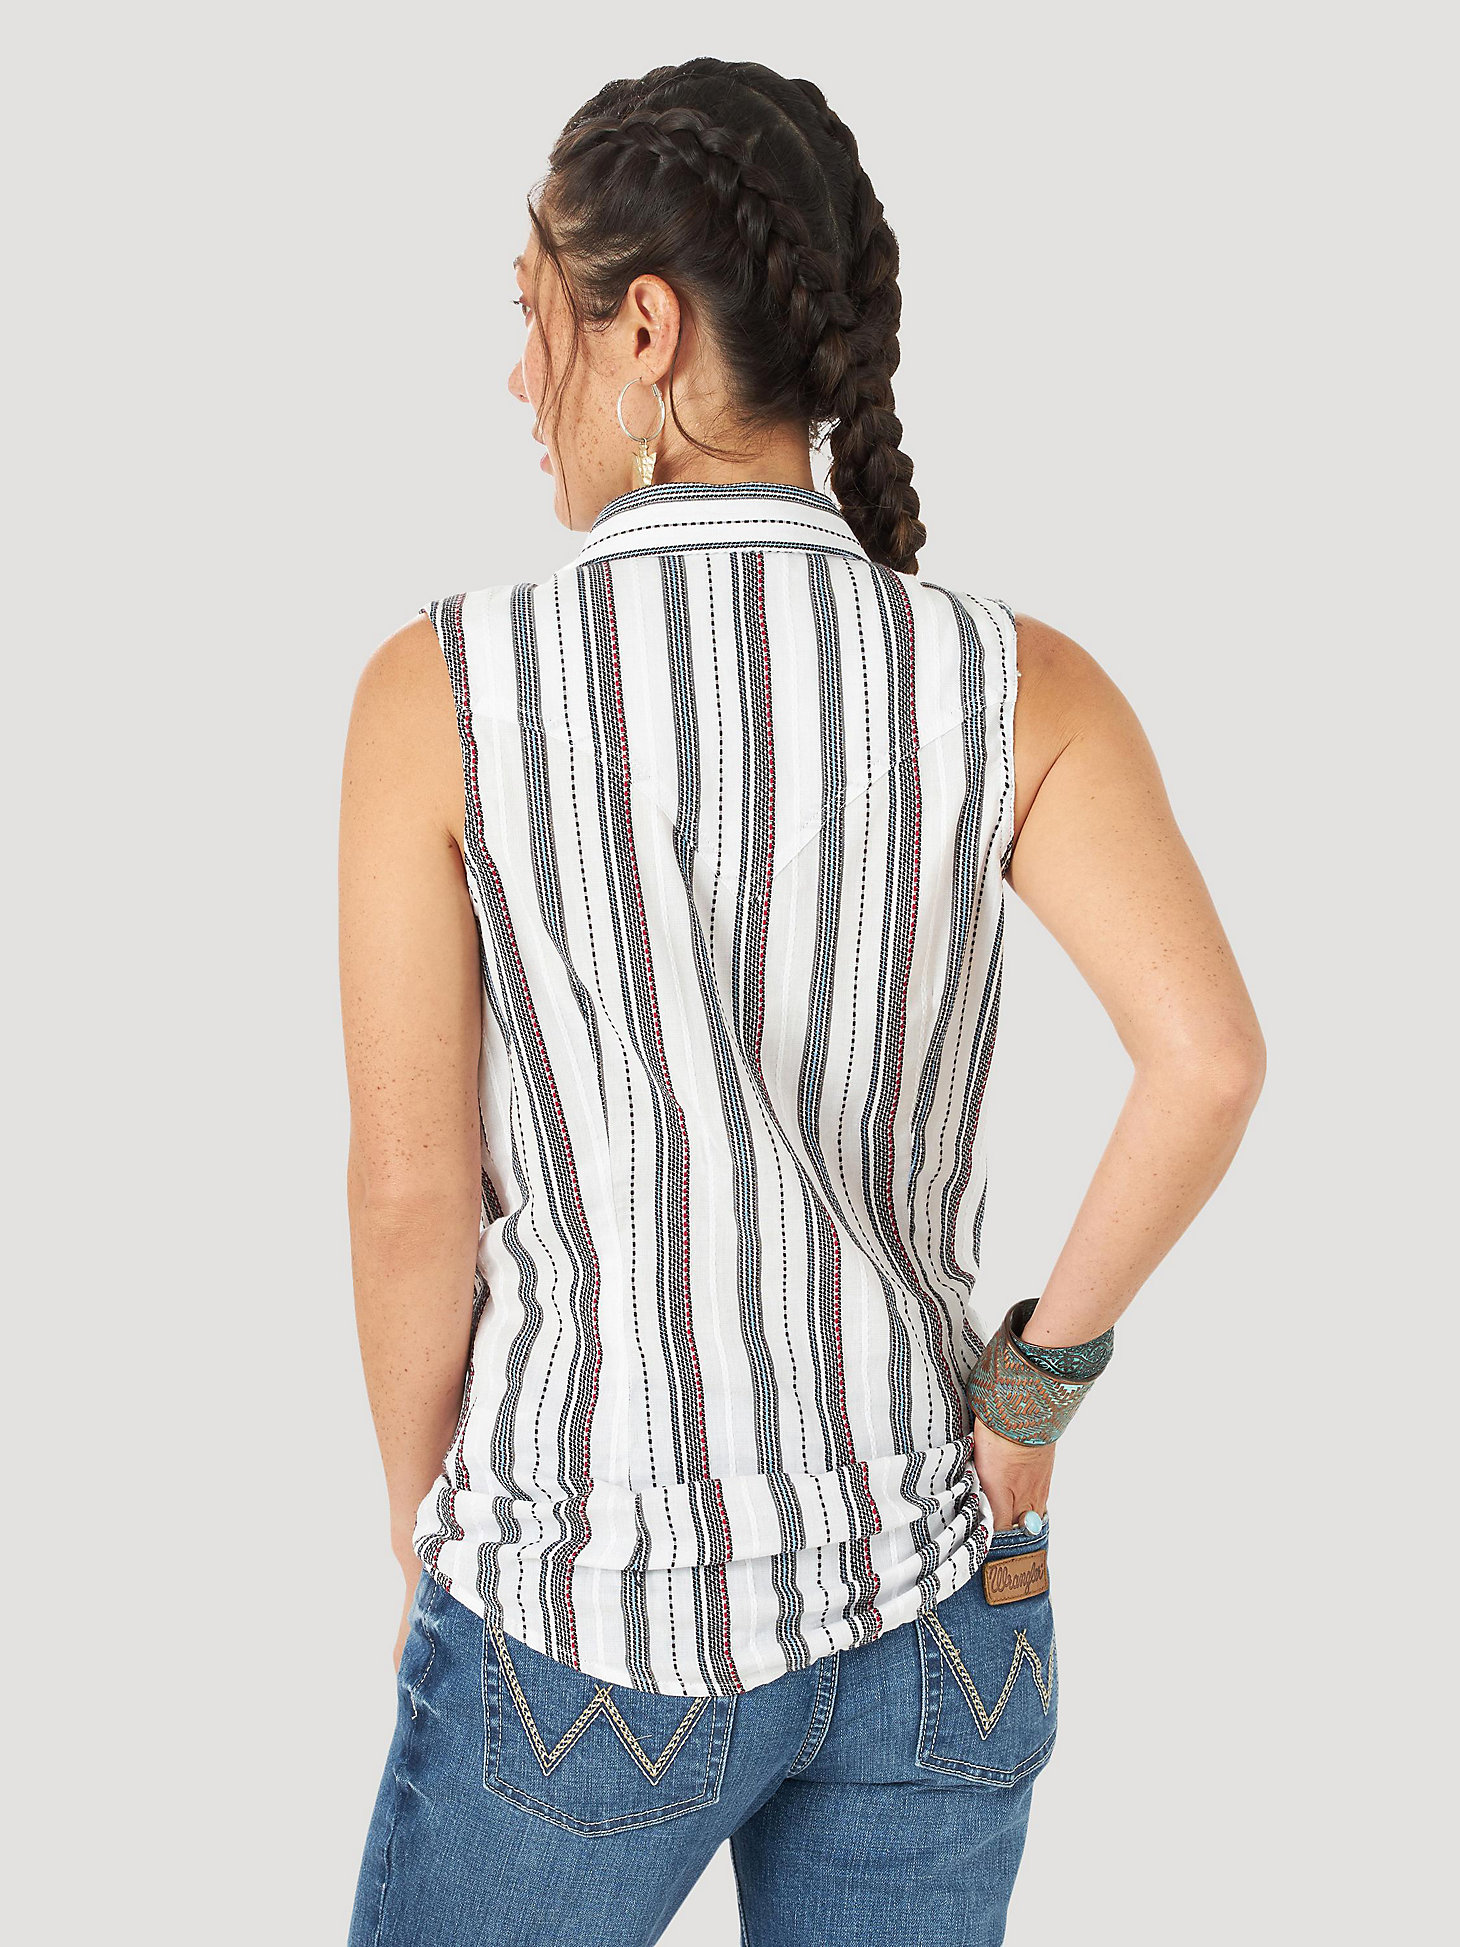 Women's Wrangler Retro® Sleeveless Print Western Snap Top in White Stripes alternative view 1